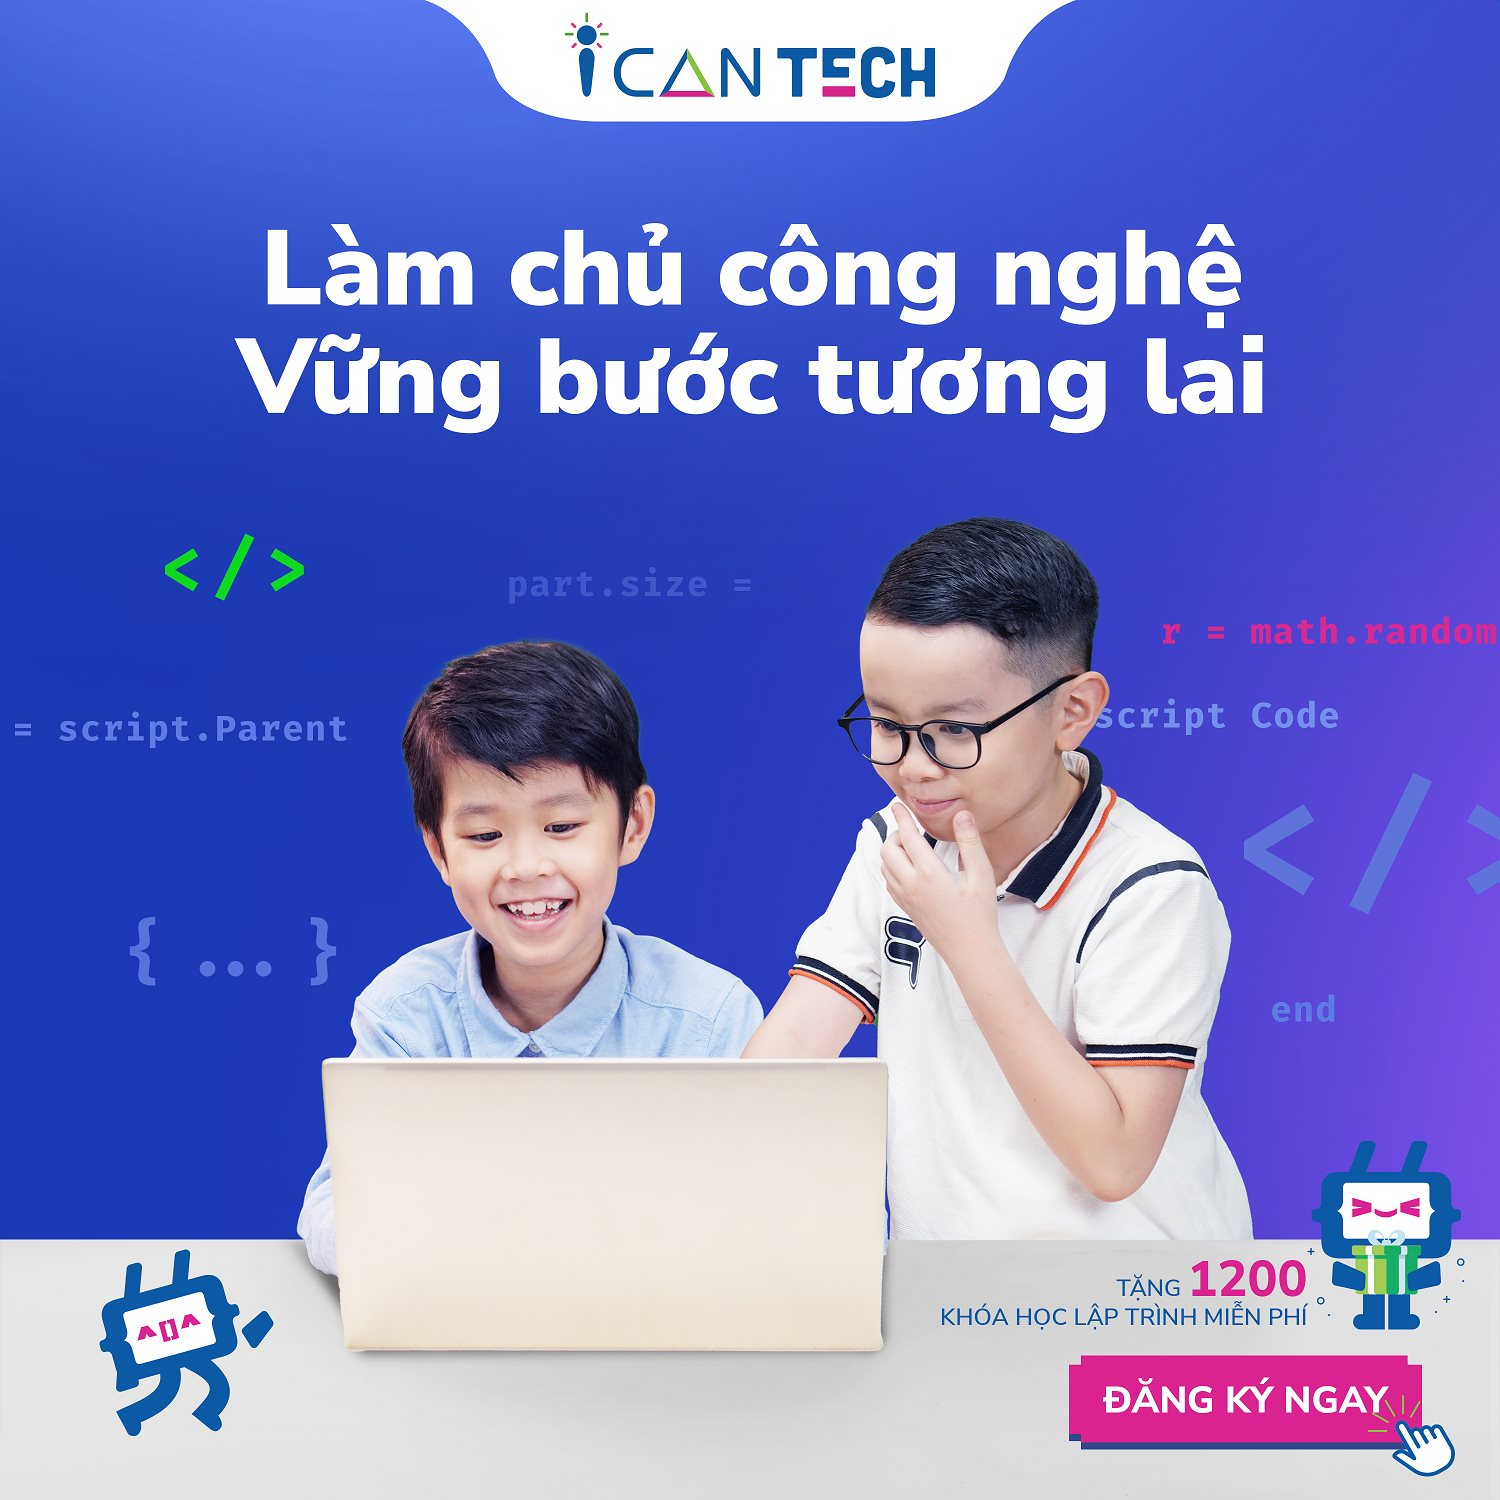 ican-tech.png